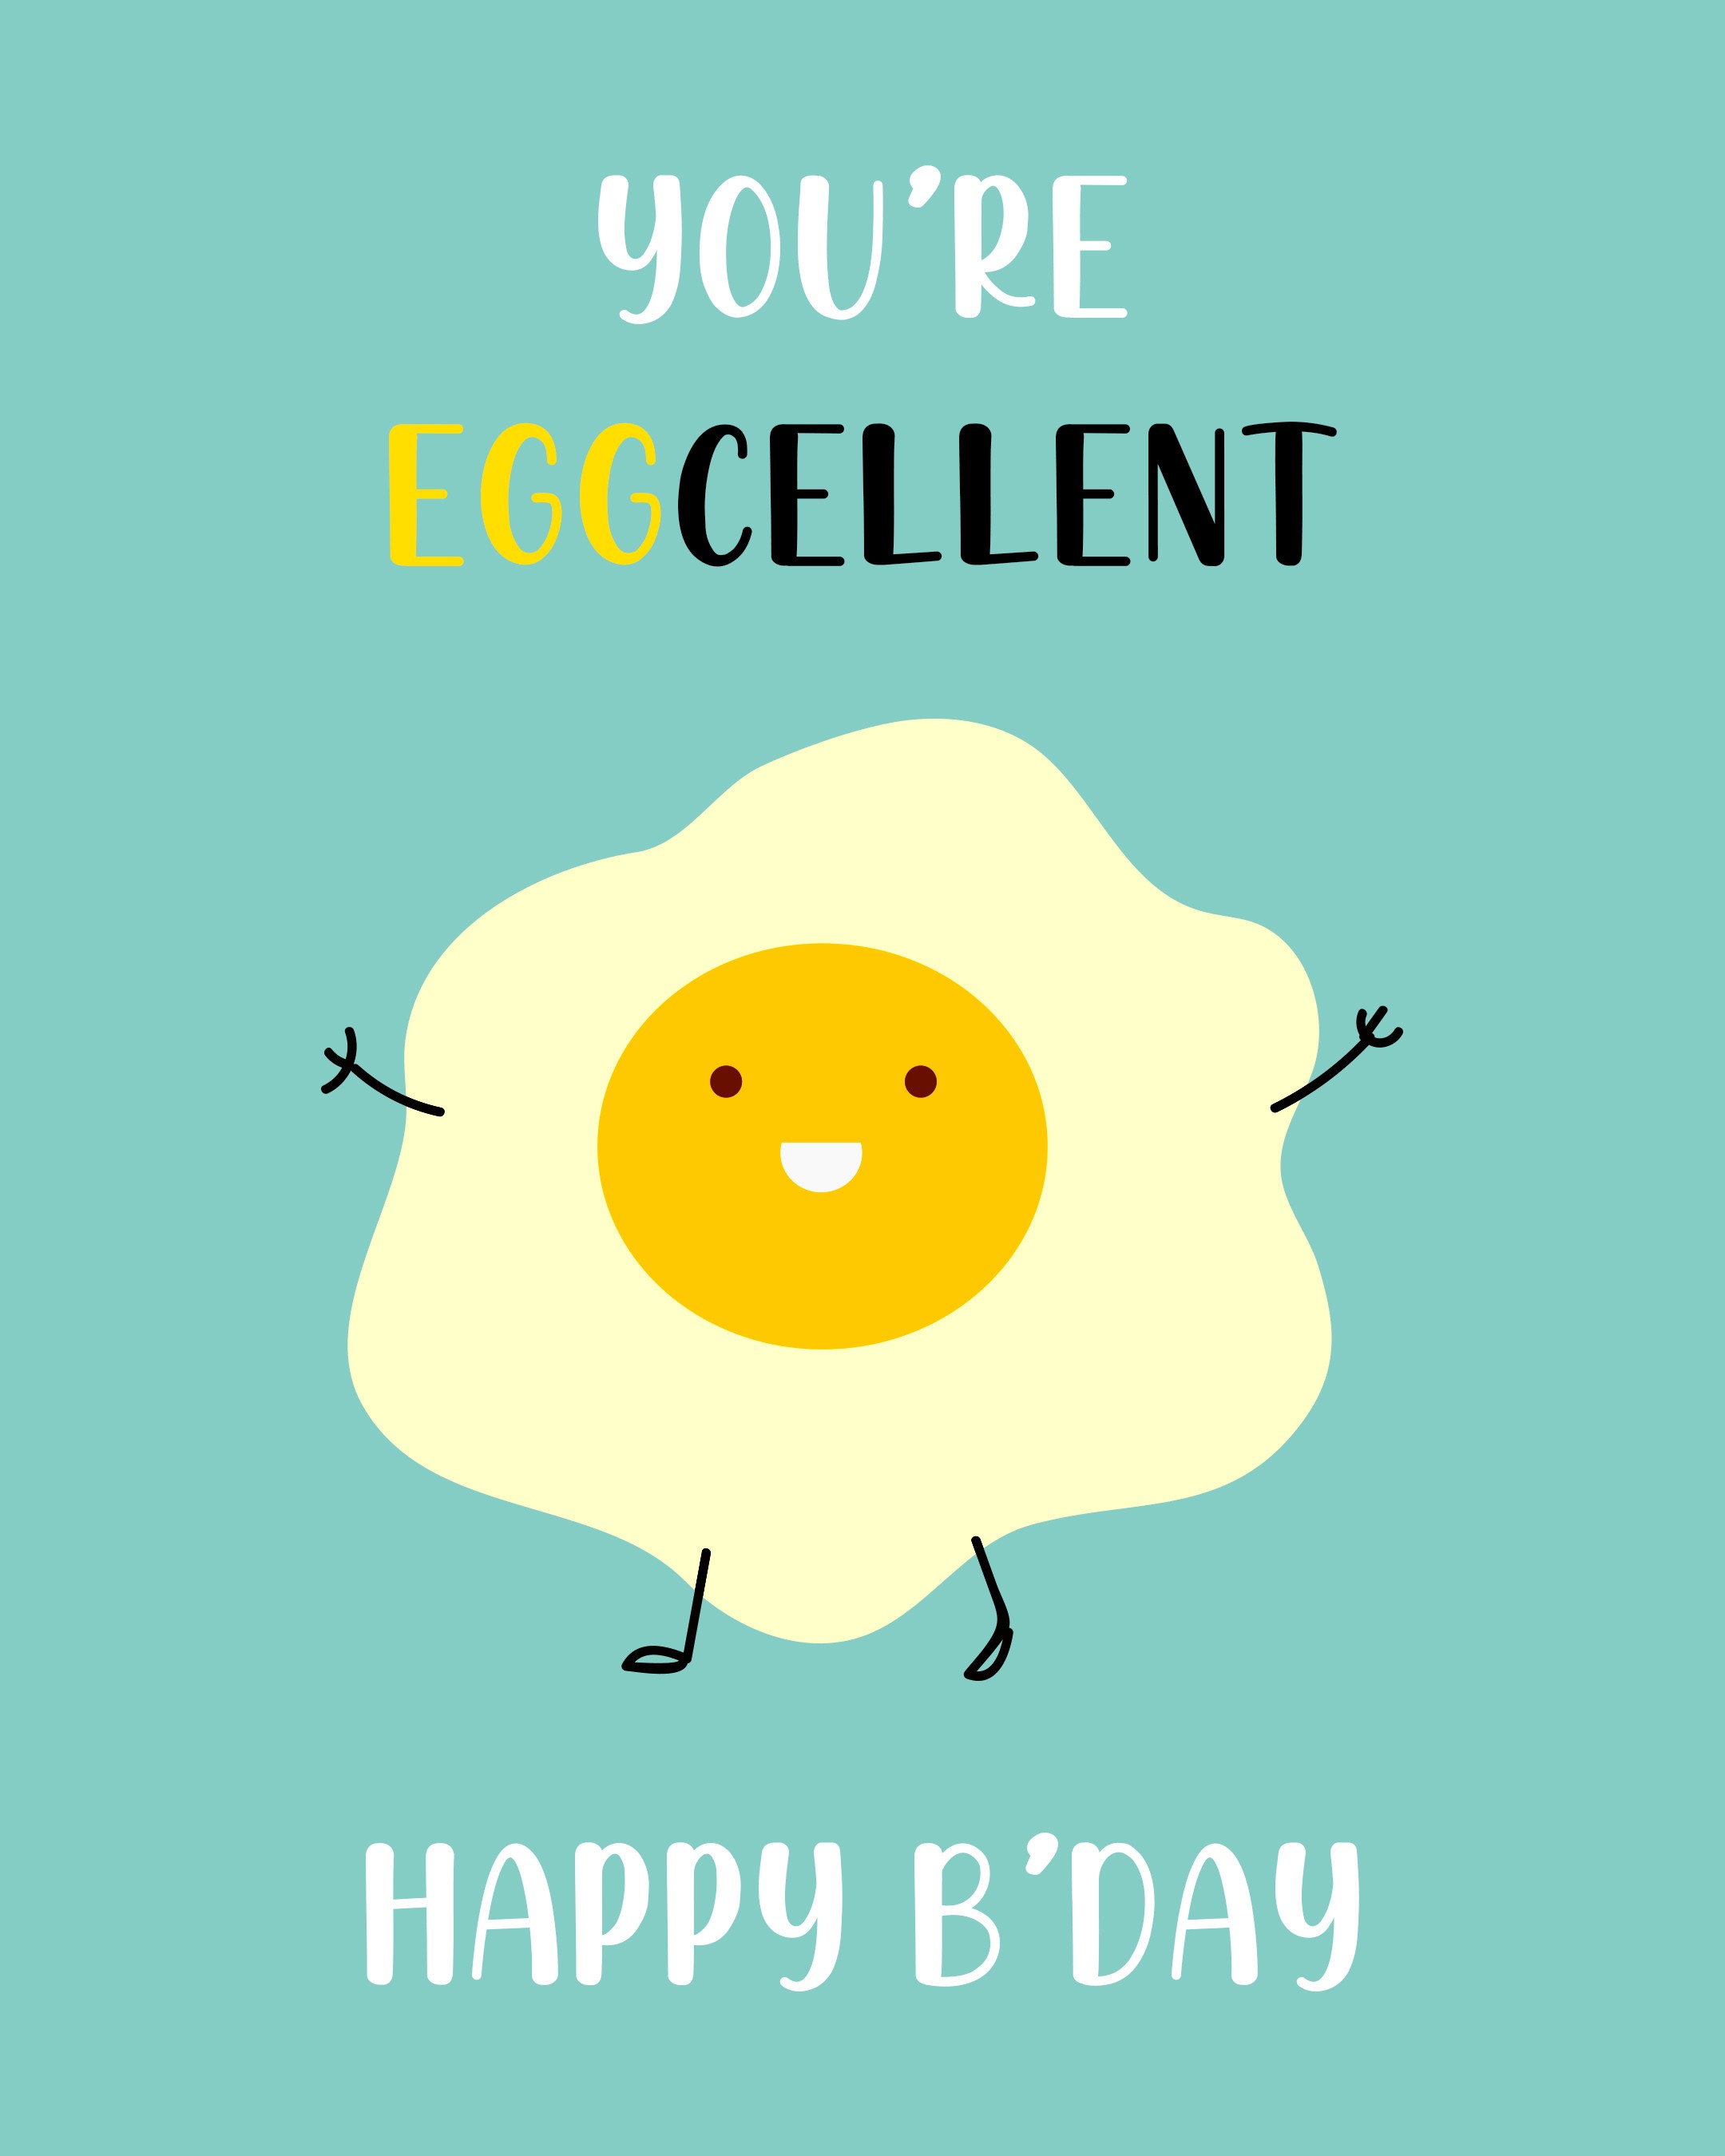 Free Funny Happy Birthday Image With Egg - birthdayimg.com